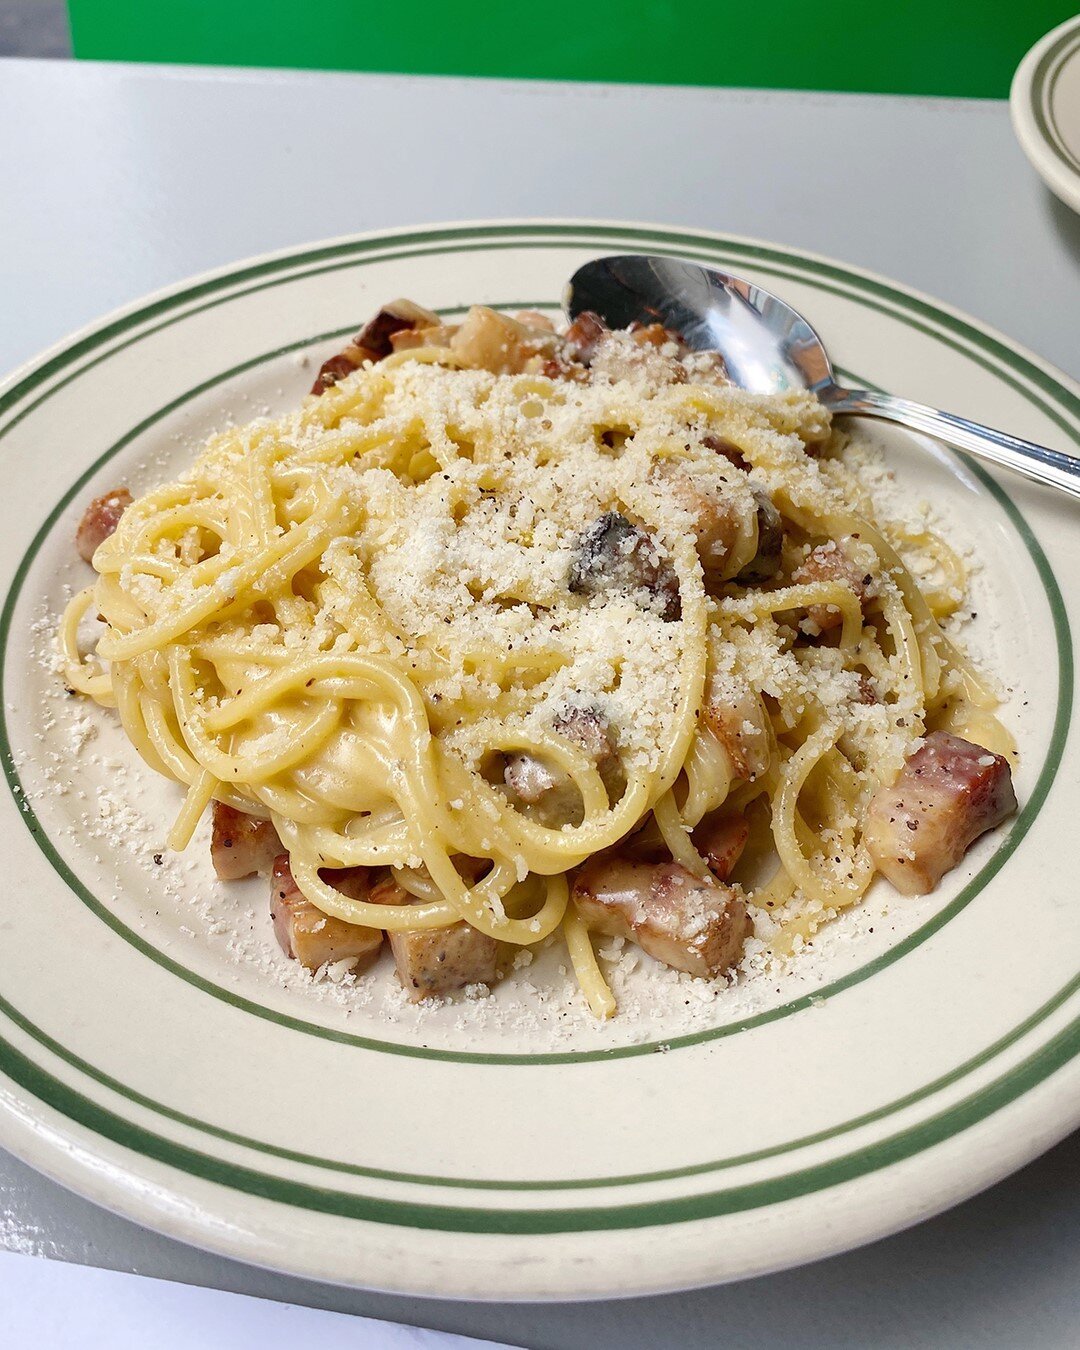 you don't have to choose between breakfast and pasta 🤤⠀⠀⠀⠀⠀⠀⠀⠀⠀
⠀⠀⠀⠀⠀⠀⠀⠀⠀
breakfast from 8AM till 11:30AM daily⠀⠀⠀⠀⠀⠀⠀⠀⠀
⠀⠀⠀⠀⠀⠀⠀⠀⠀
spaghetti carbonara, pancetta, pecorino⠀⠀⠀⠀⠀⠀⠀⠀⠀
⠀⠀⠀⠀⠀⠀⠀⠀⠀
#jonandvinnys